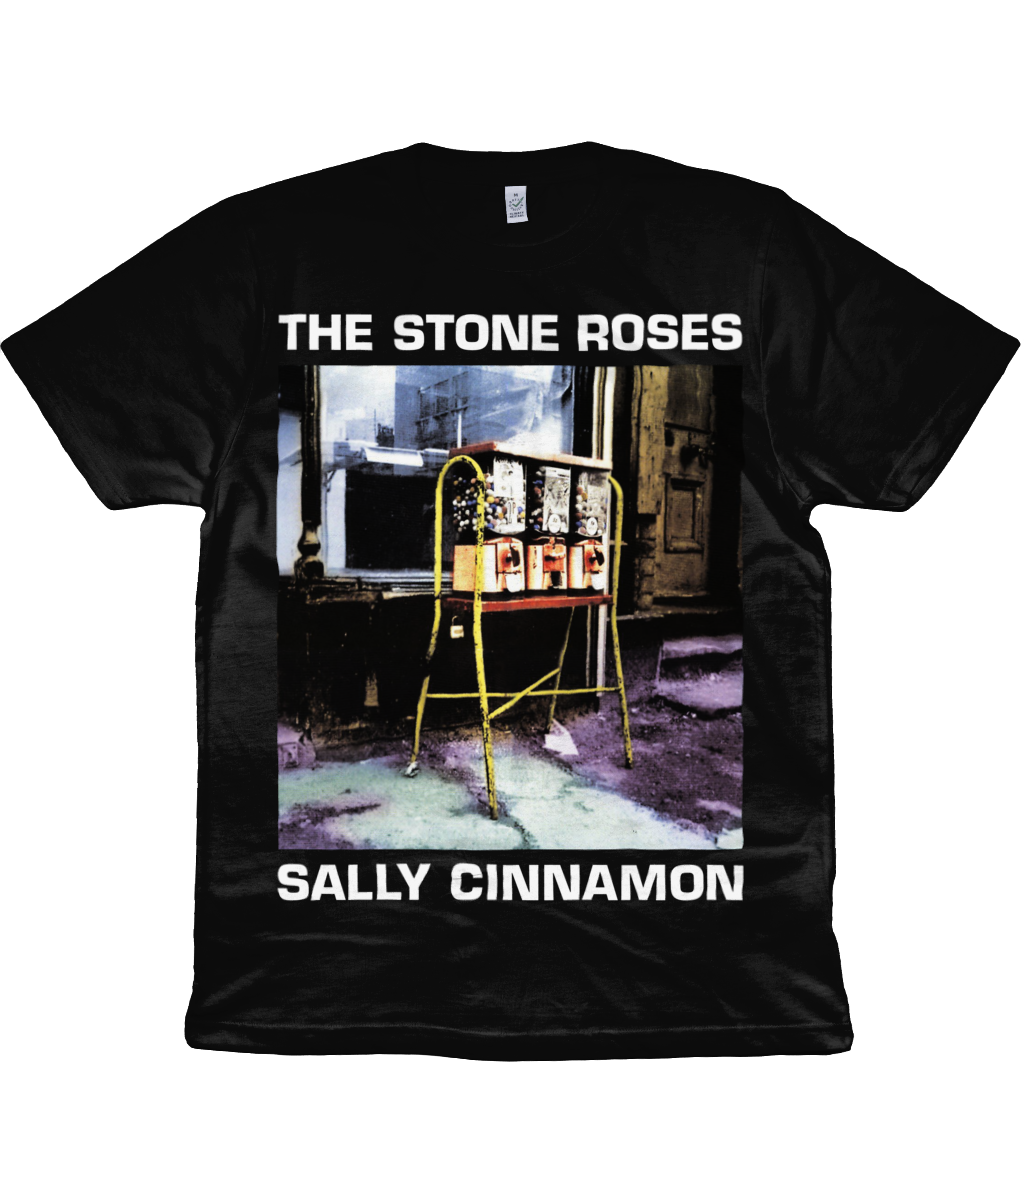 The Stone Roses - Sally Cinnamon - 1987